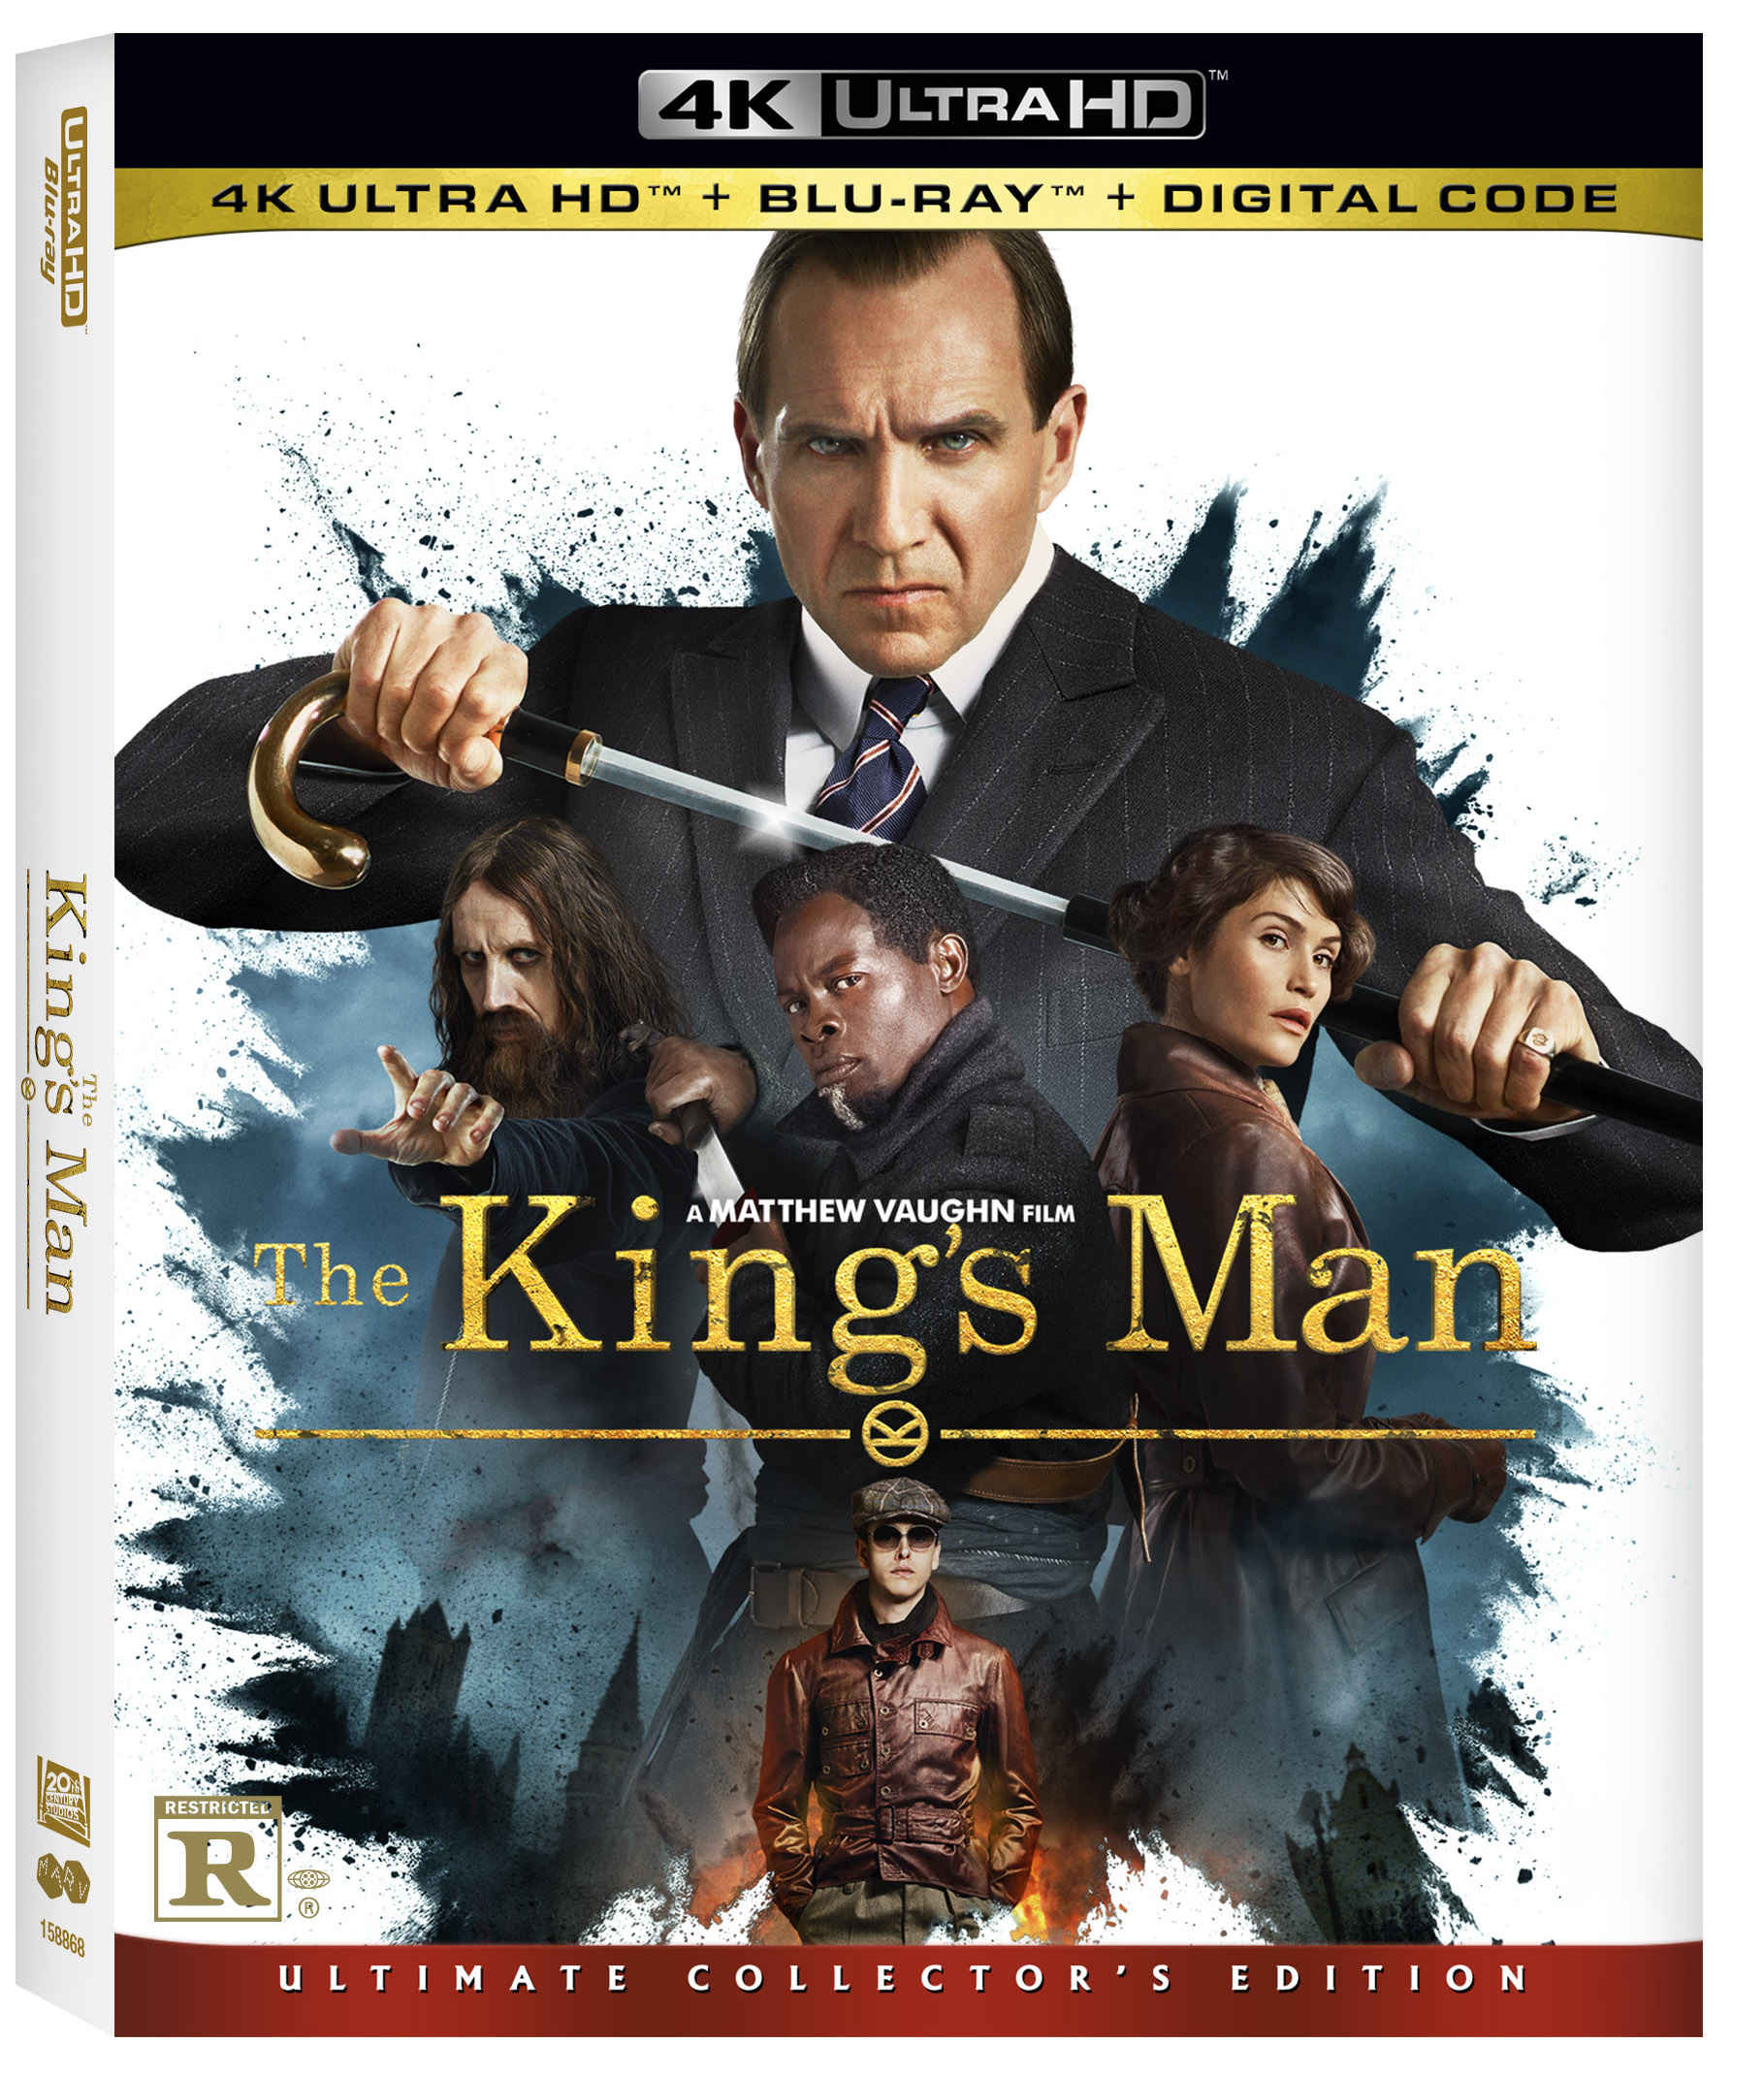 The King's Man 4K Cover Art